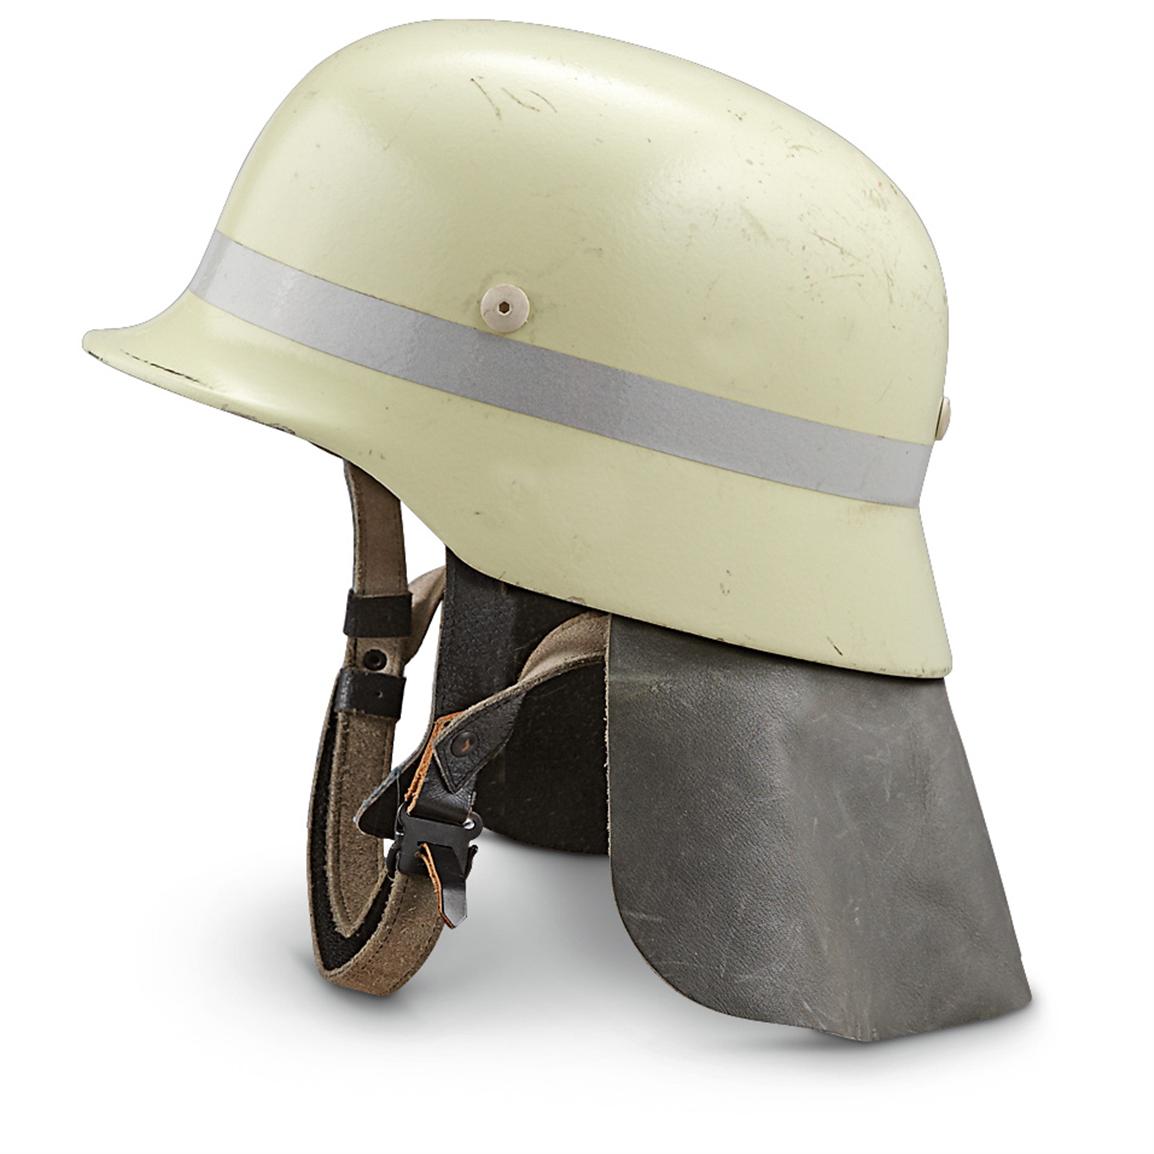 Used German Wwii Style Glowing Fire Helmet 293898 Helmets Accessories At Sportsman S Guide